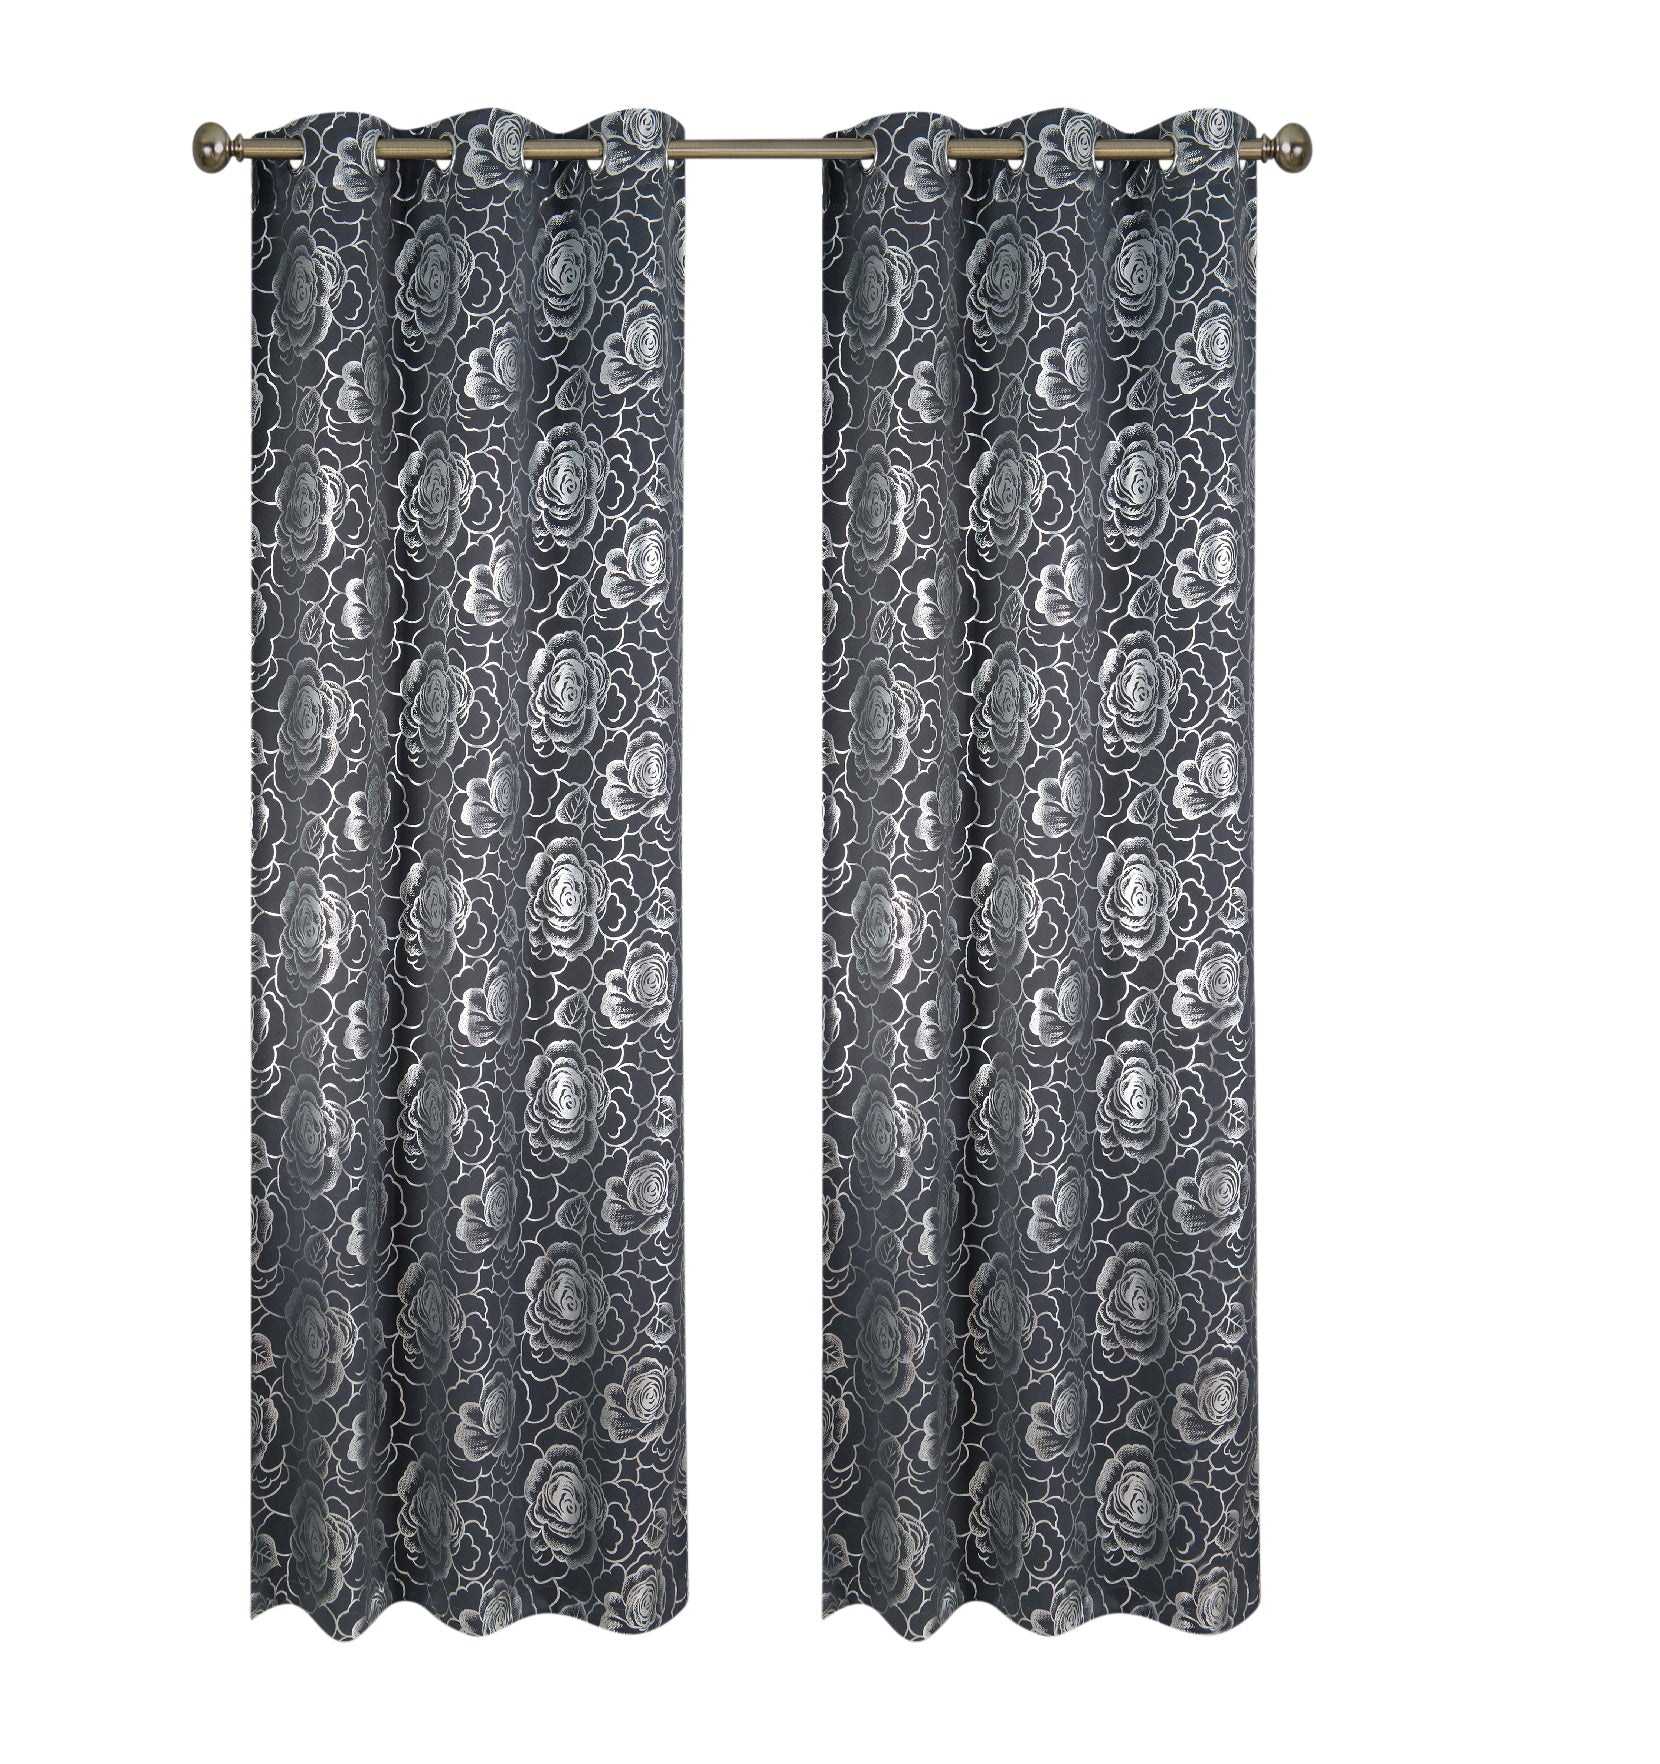 Floral Metallic  Blackout Thermal Grommet Curtain Panels (Set of 2)